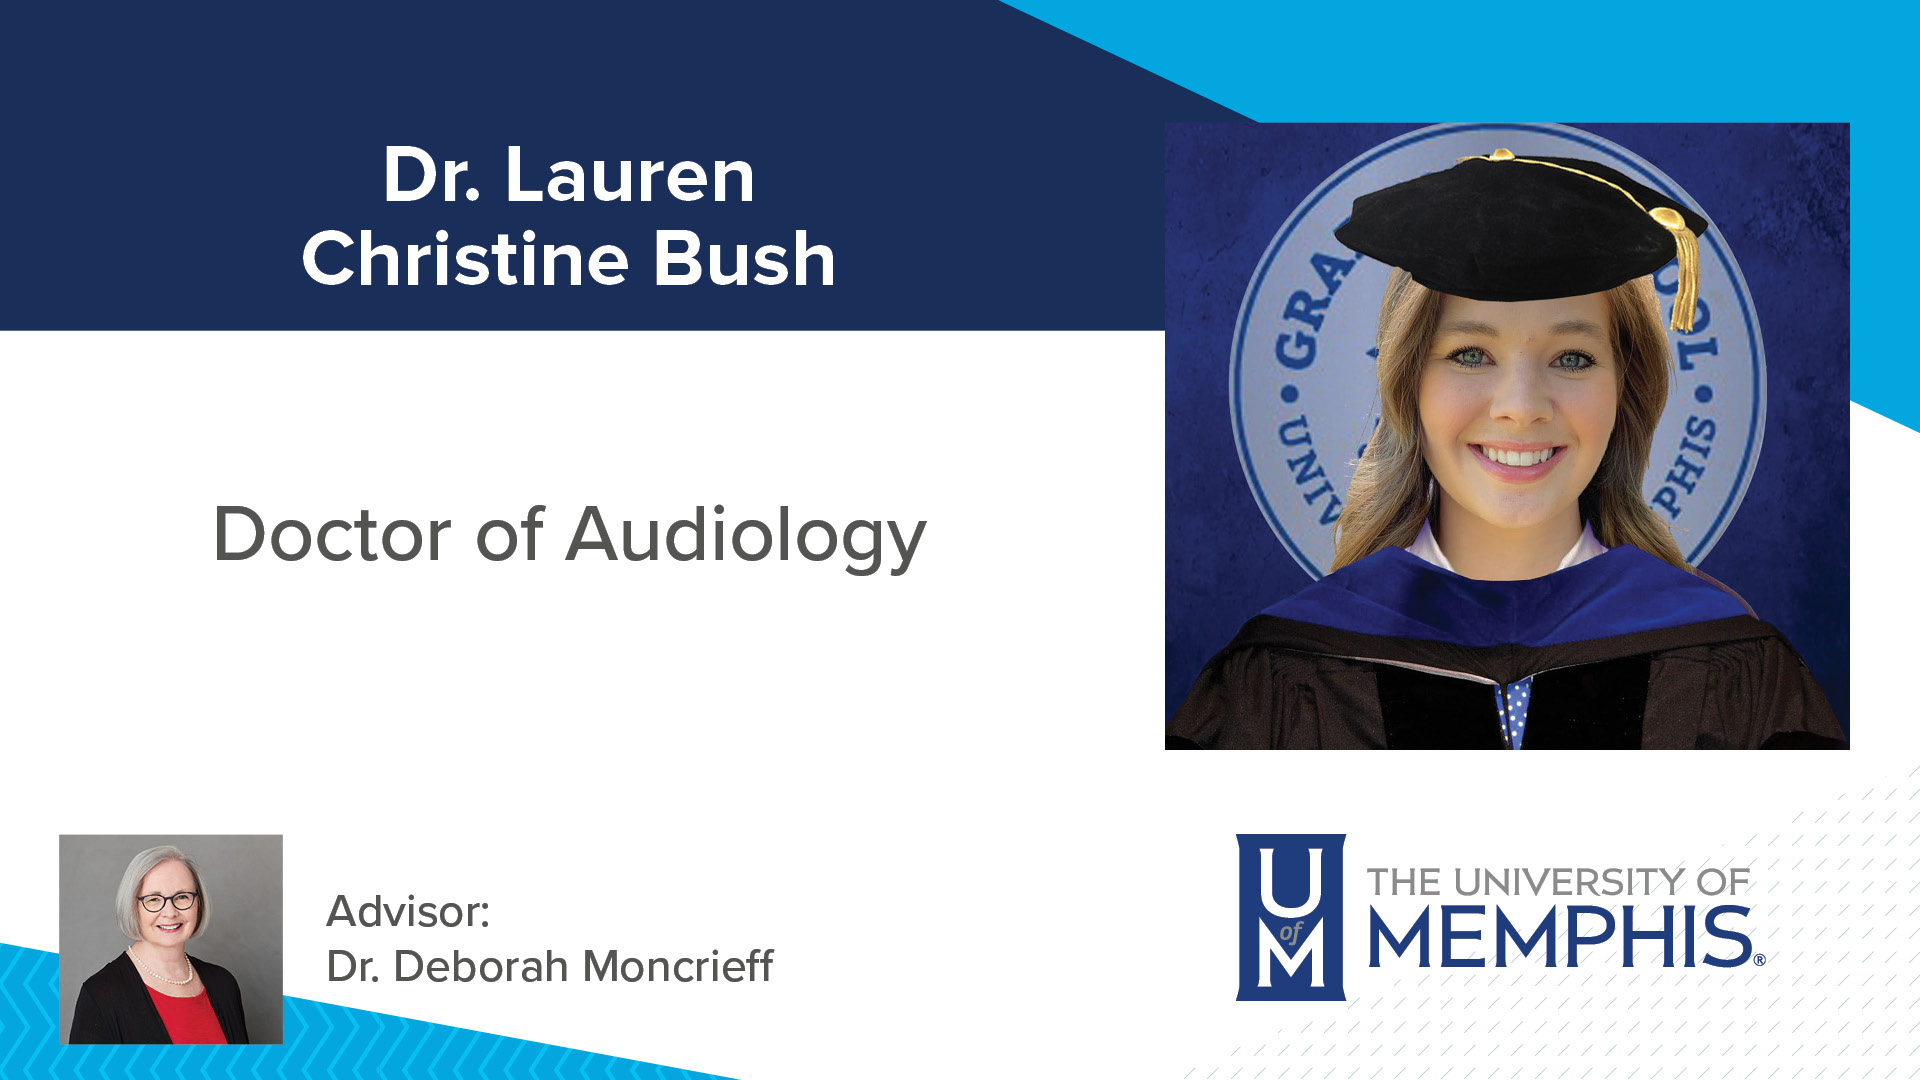 Dr. Lauren Christine Bush - Doctor of Audiology - Major Professor: Dr. Deborah Moncrieff